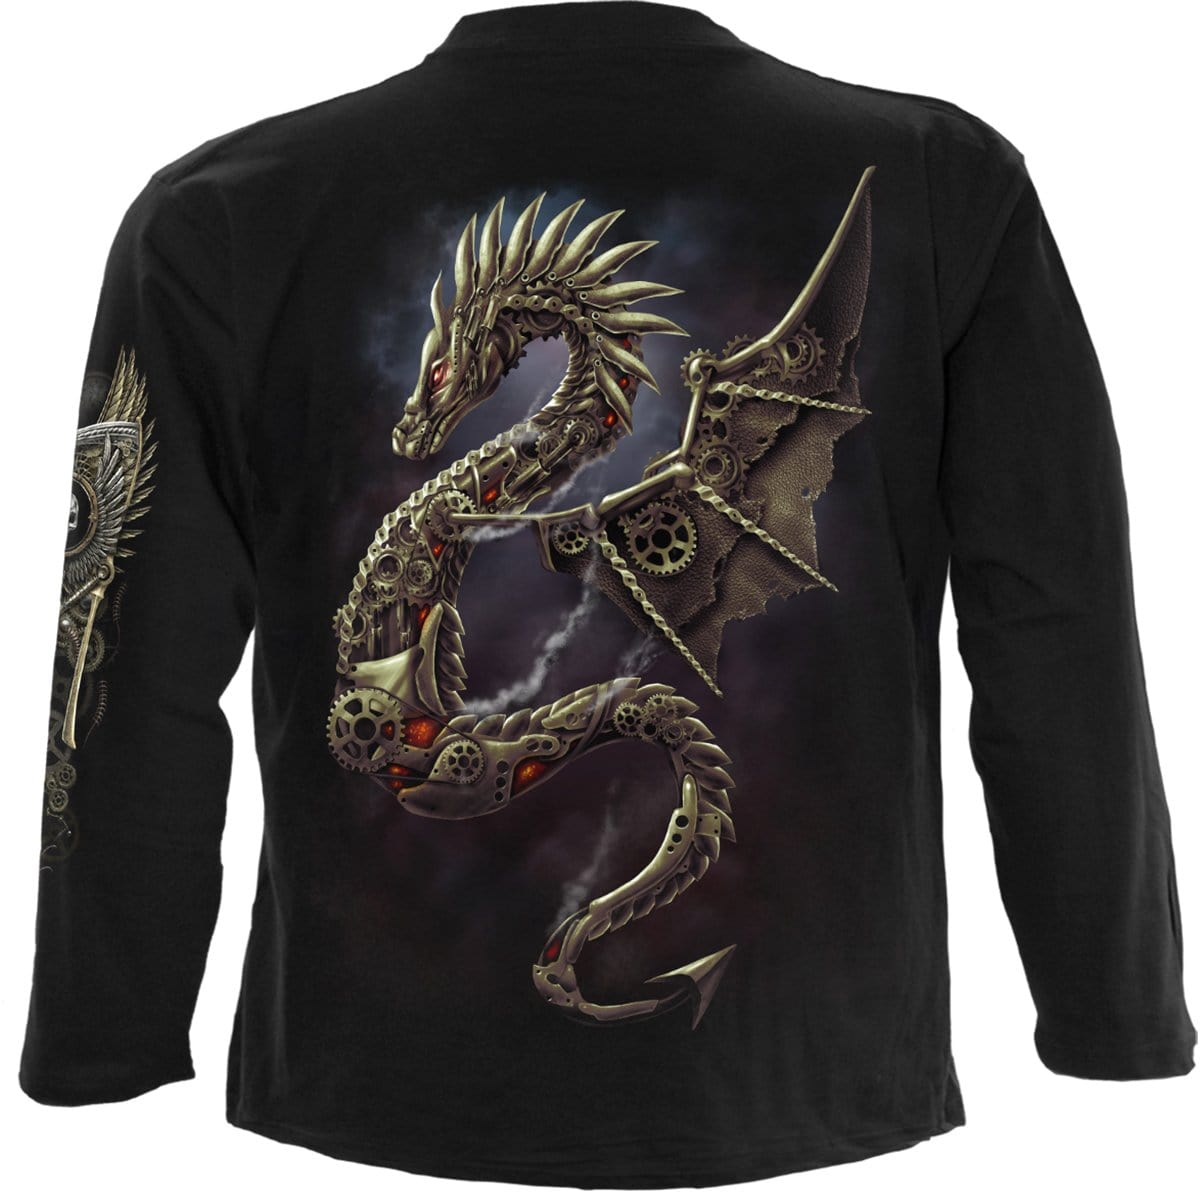 DRAGON COGS - Longsleeve T-Shirt Black - Spiral USA